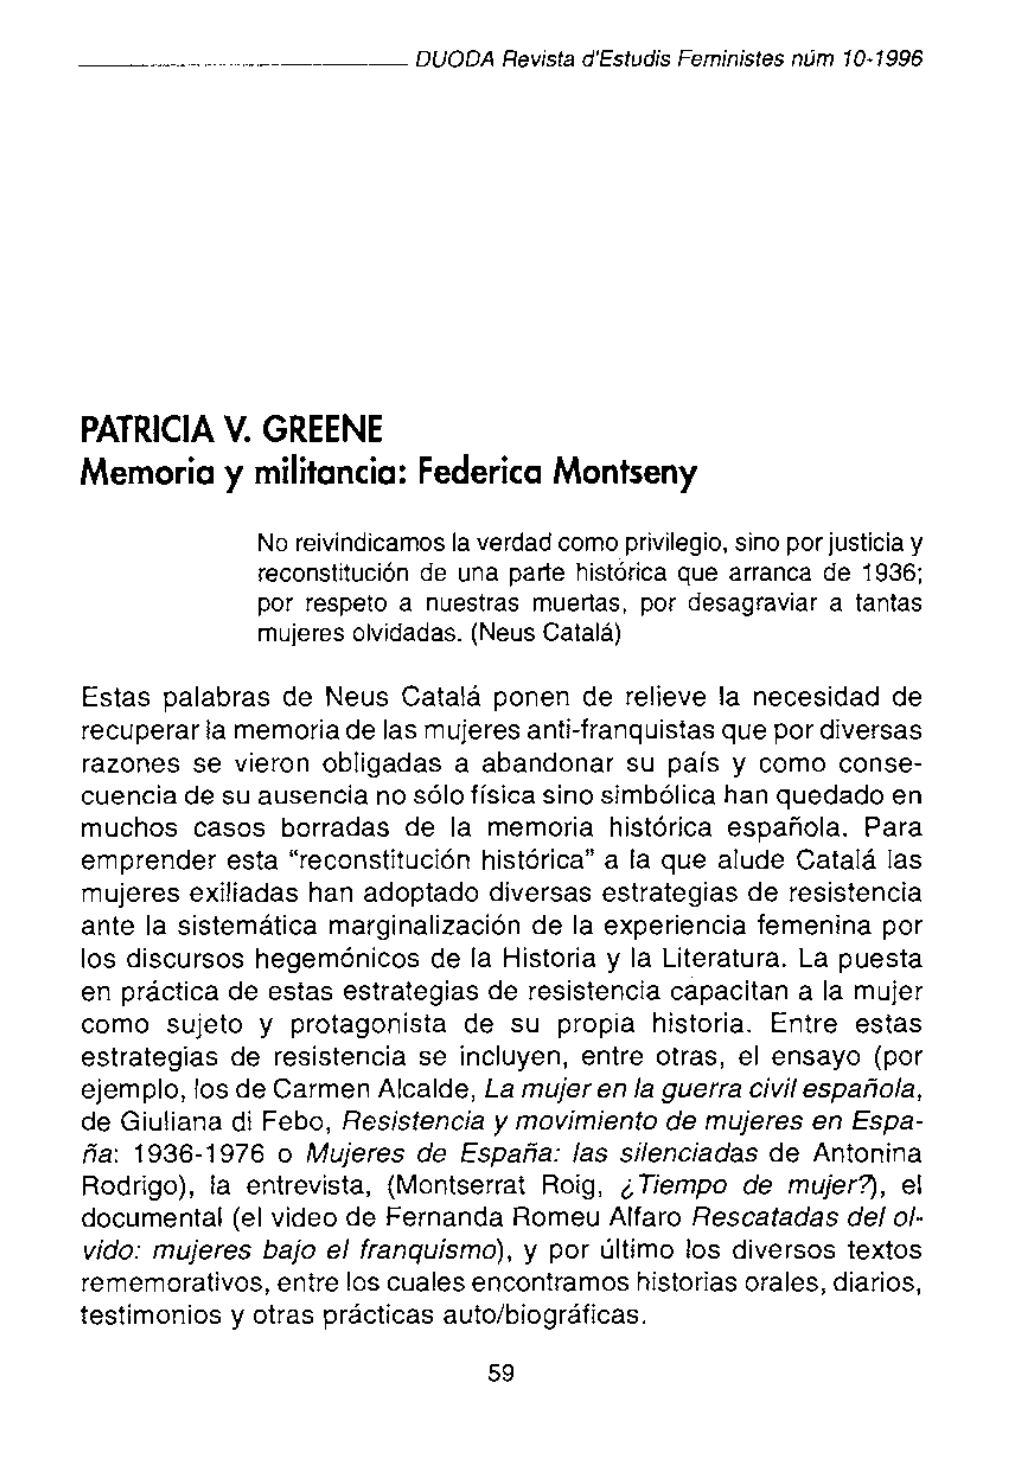 PATRICIA V. GREENE Memoria Y Militancia: Federica Montseny